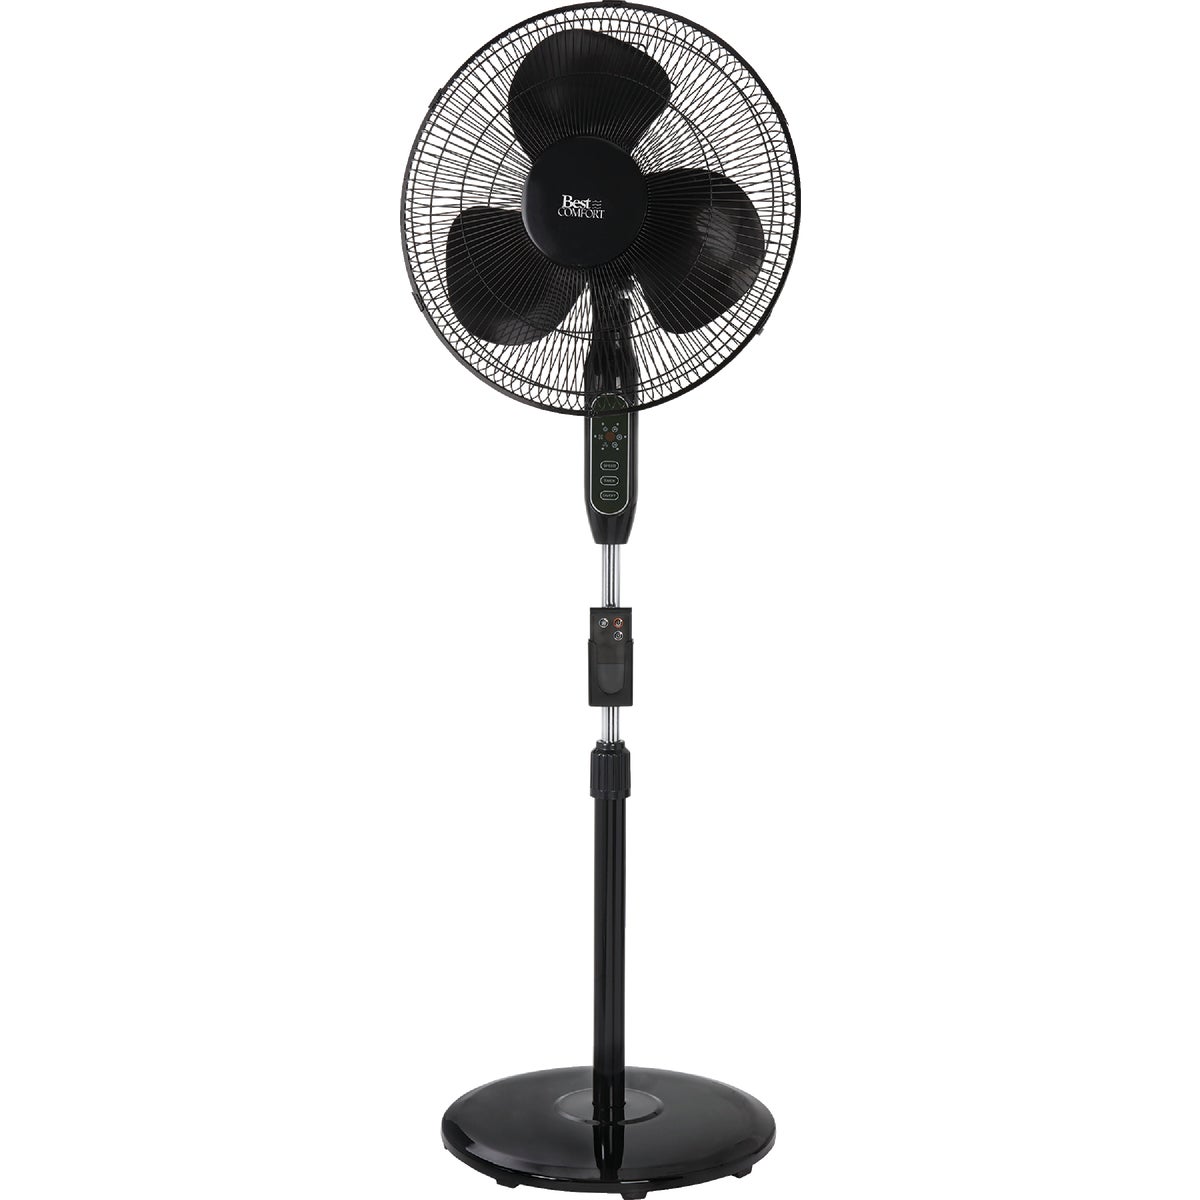 Item 501879, 16-inch oscillating pedestal fan.